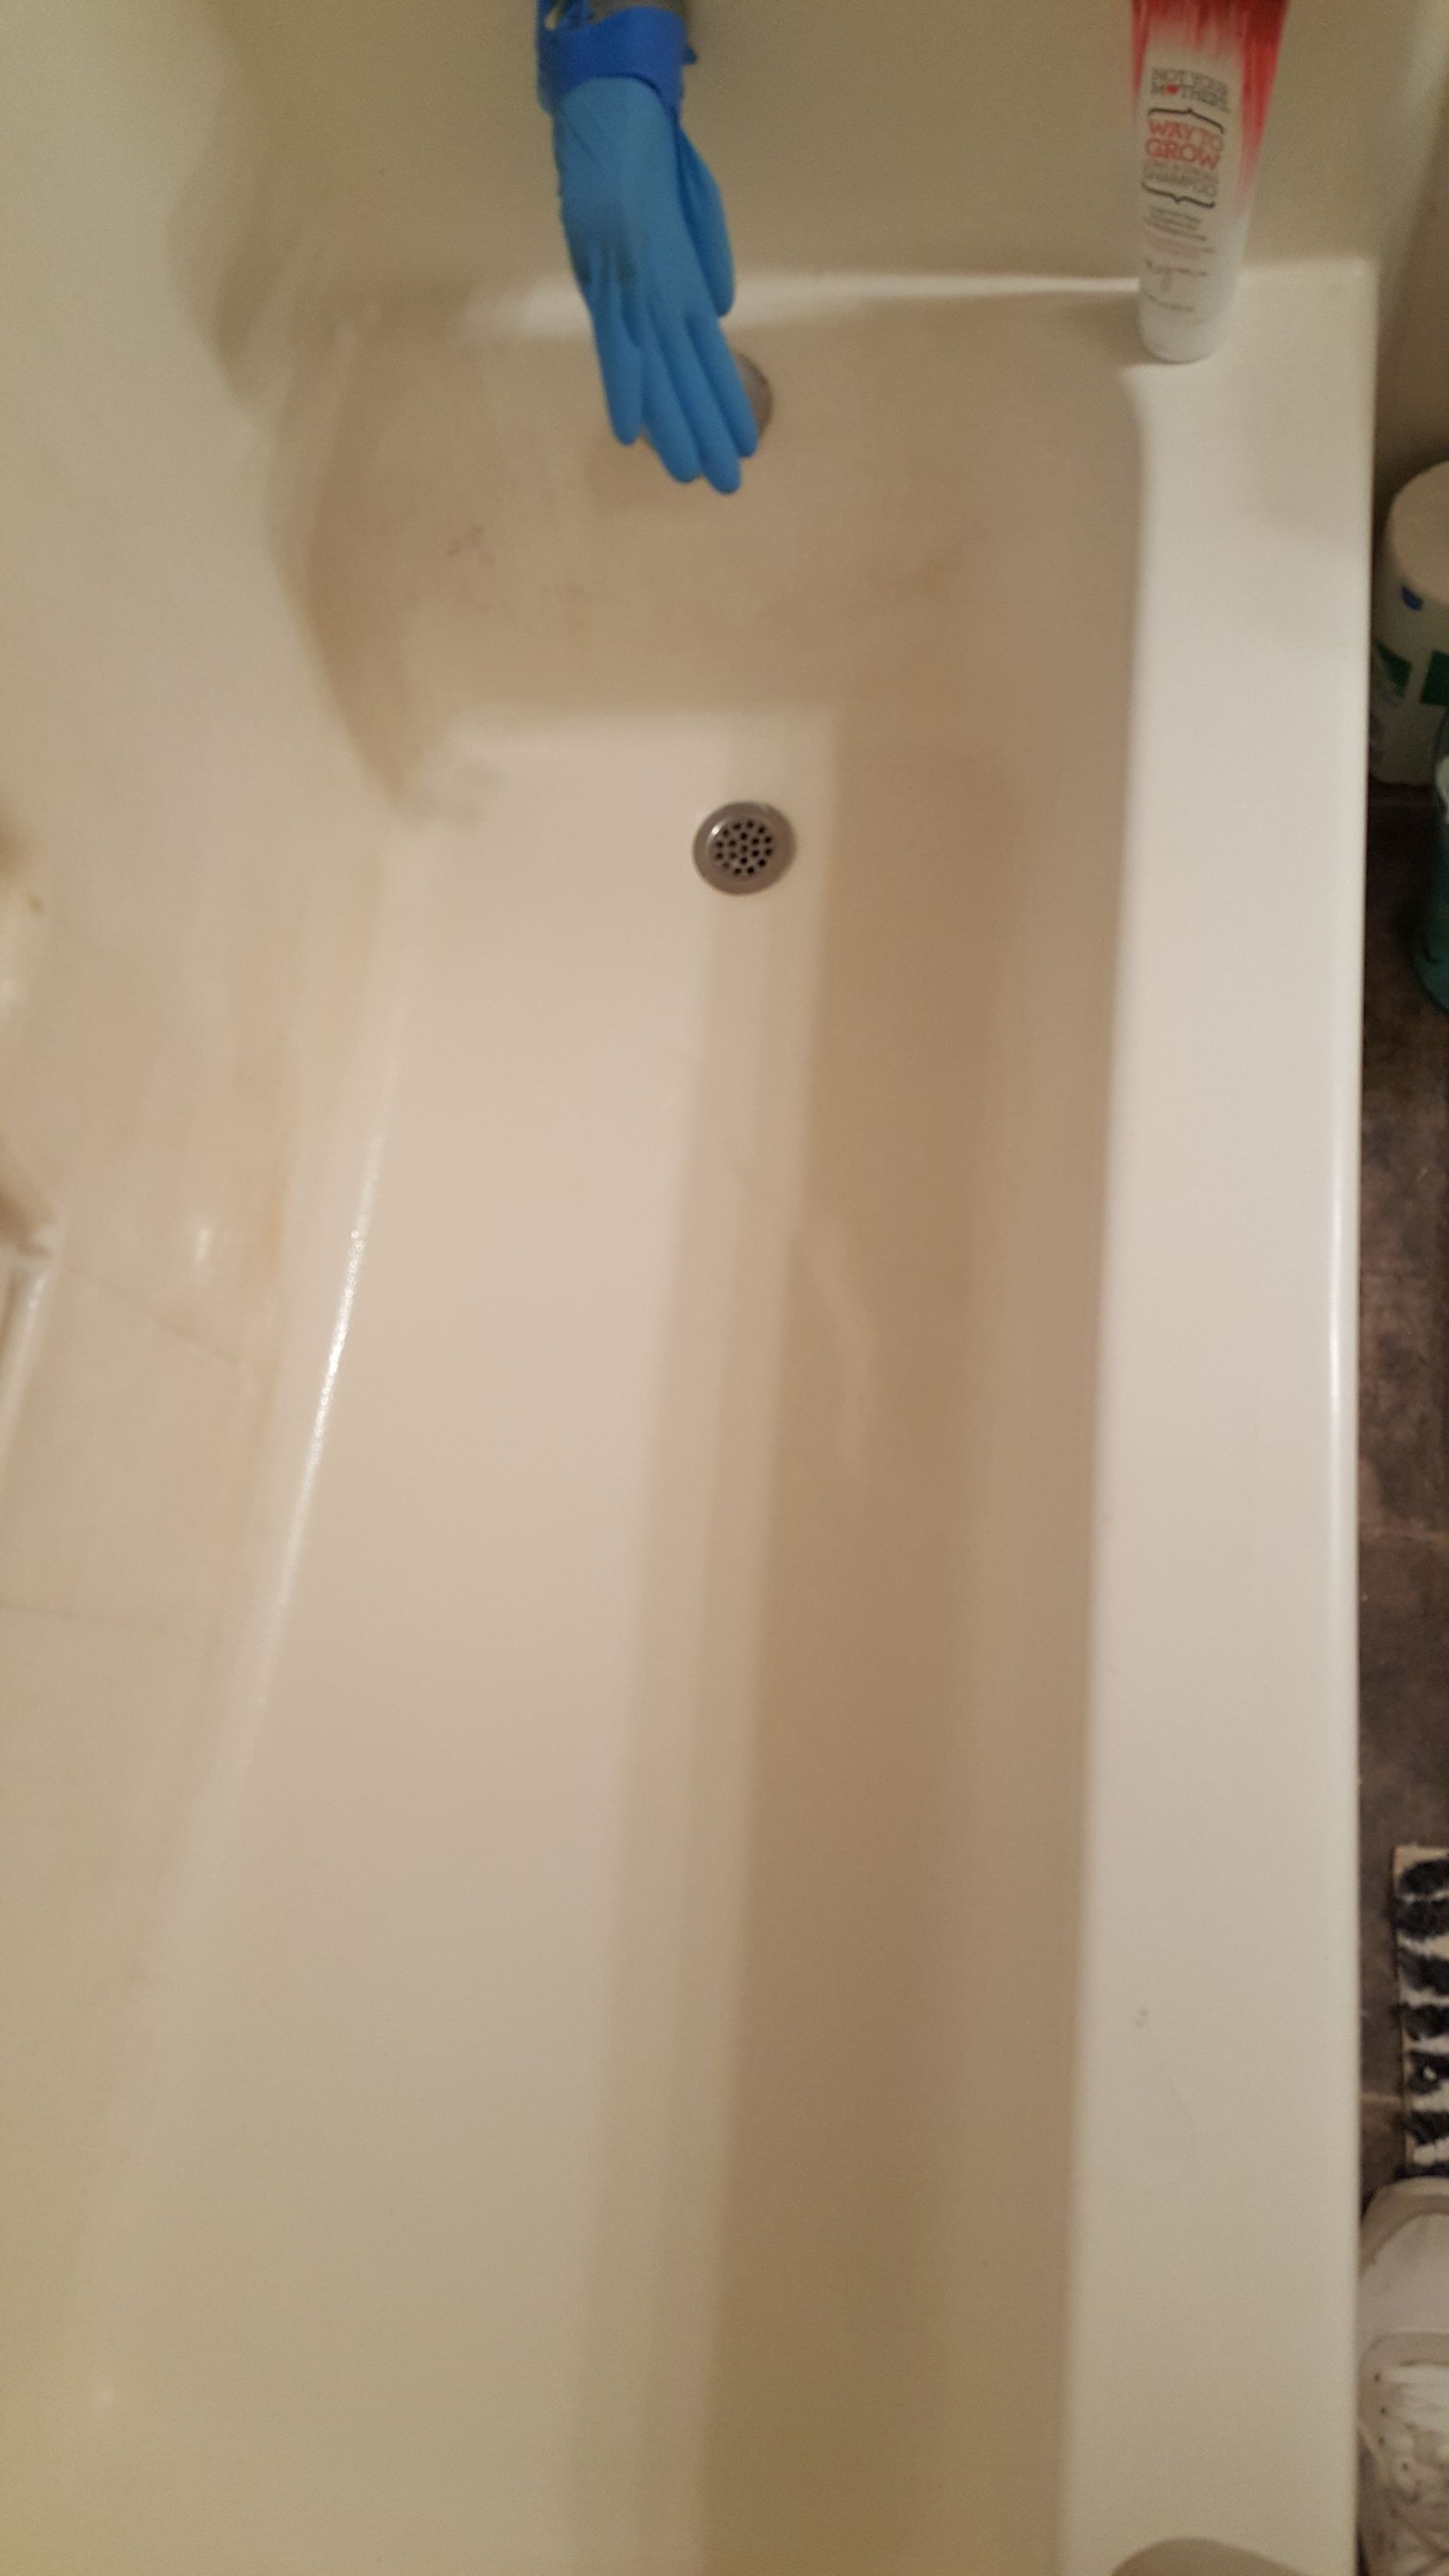 Repaired cracked bathtub